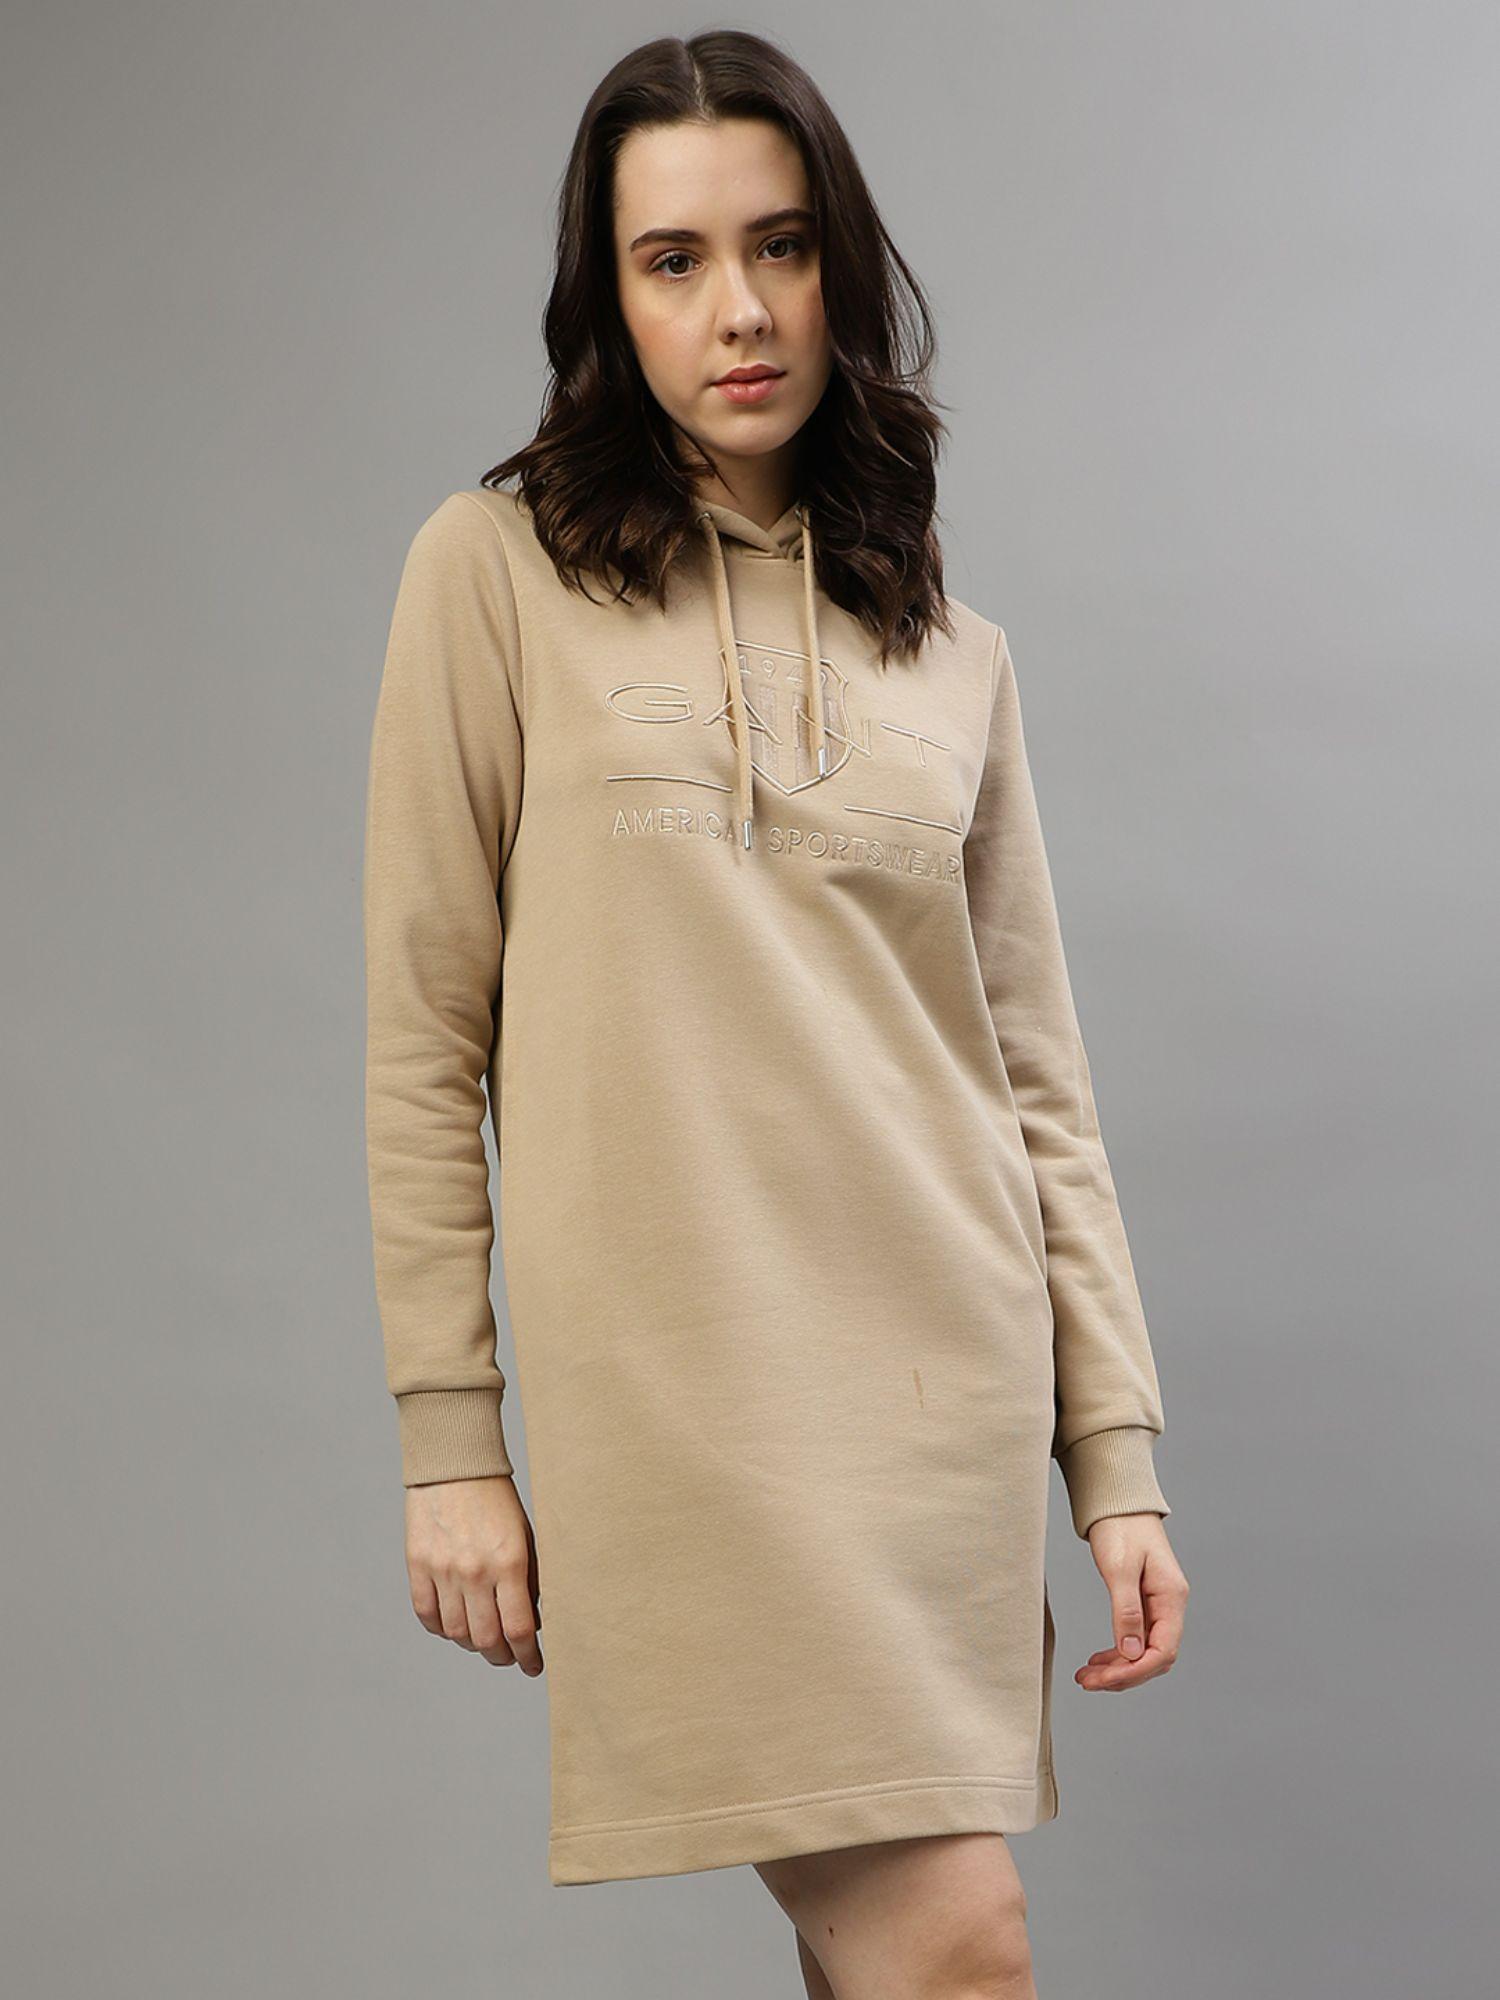 women embroidered hooded full sleeves dress